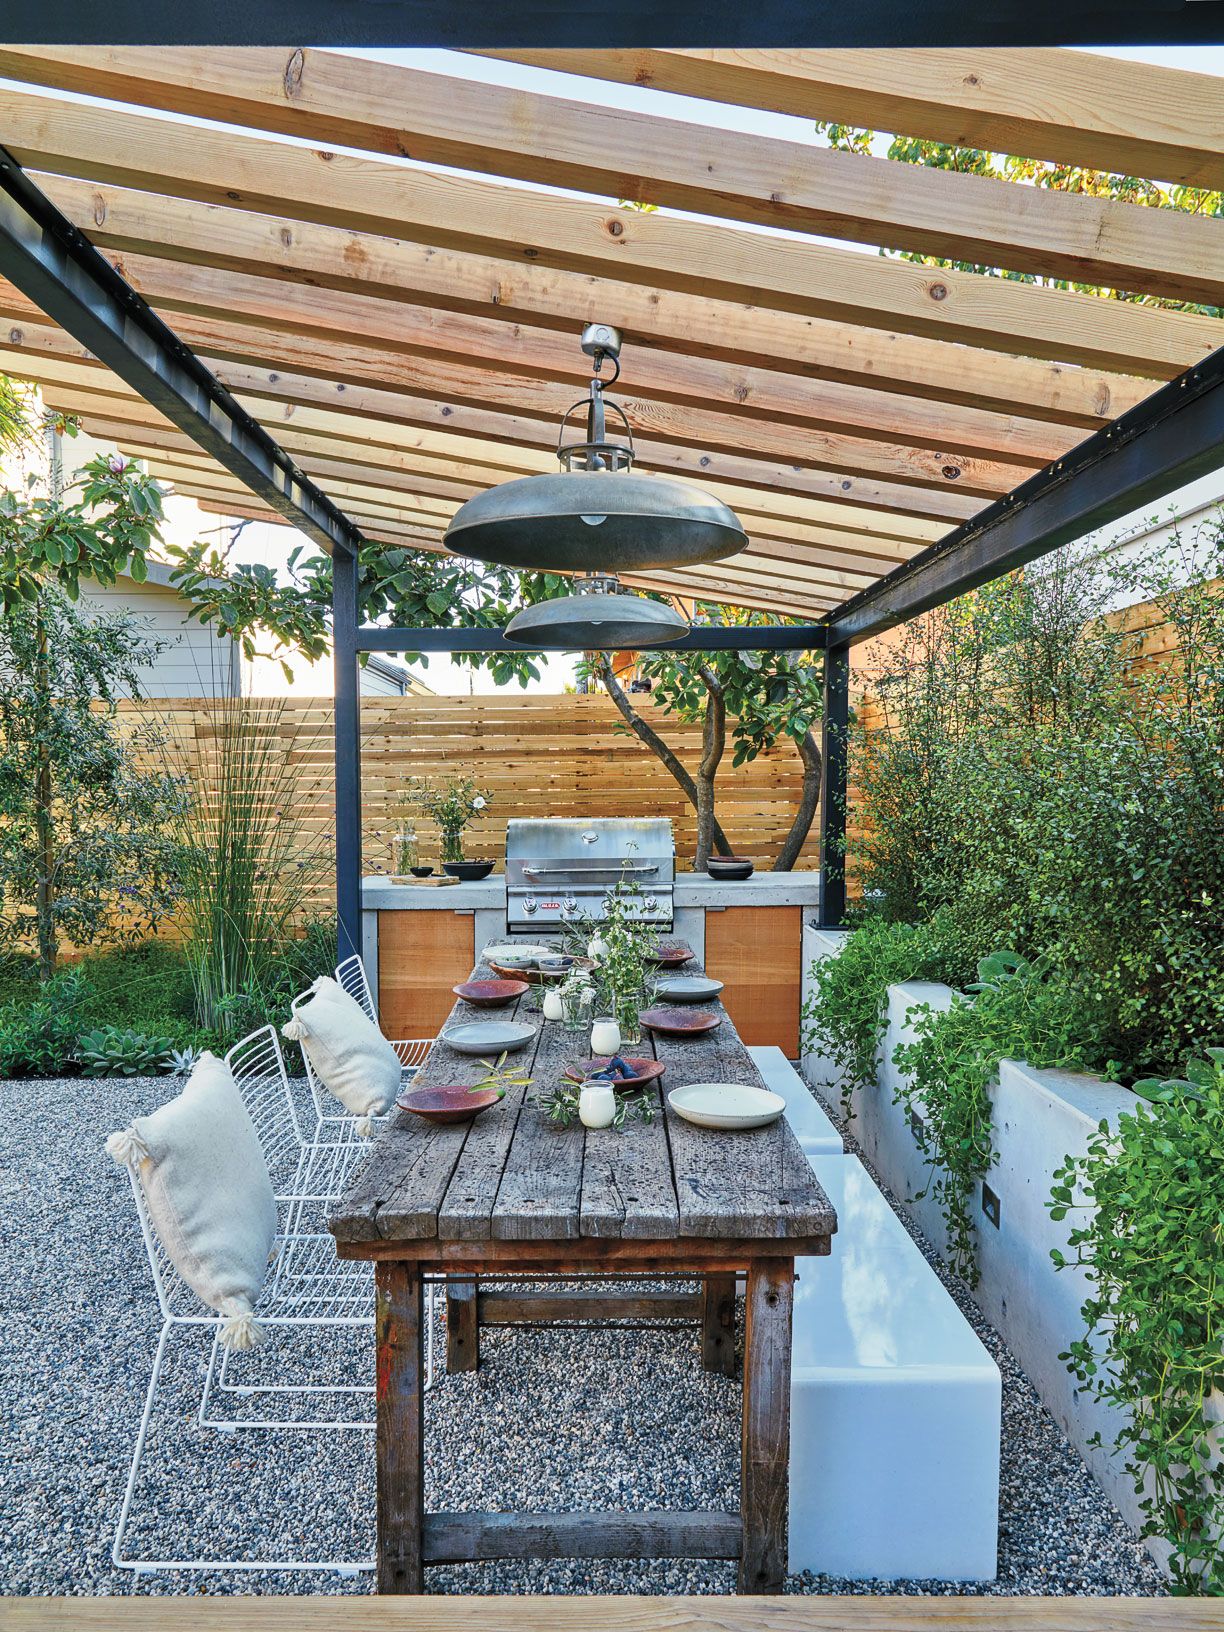 Creative Patio Ideas for Your Backyard Oasis